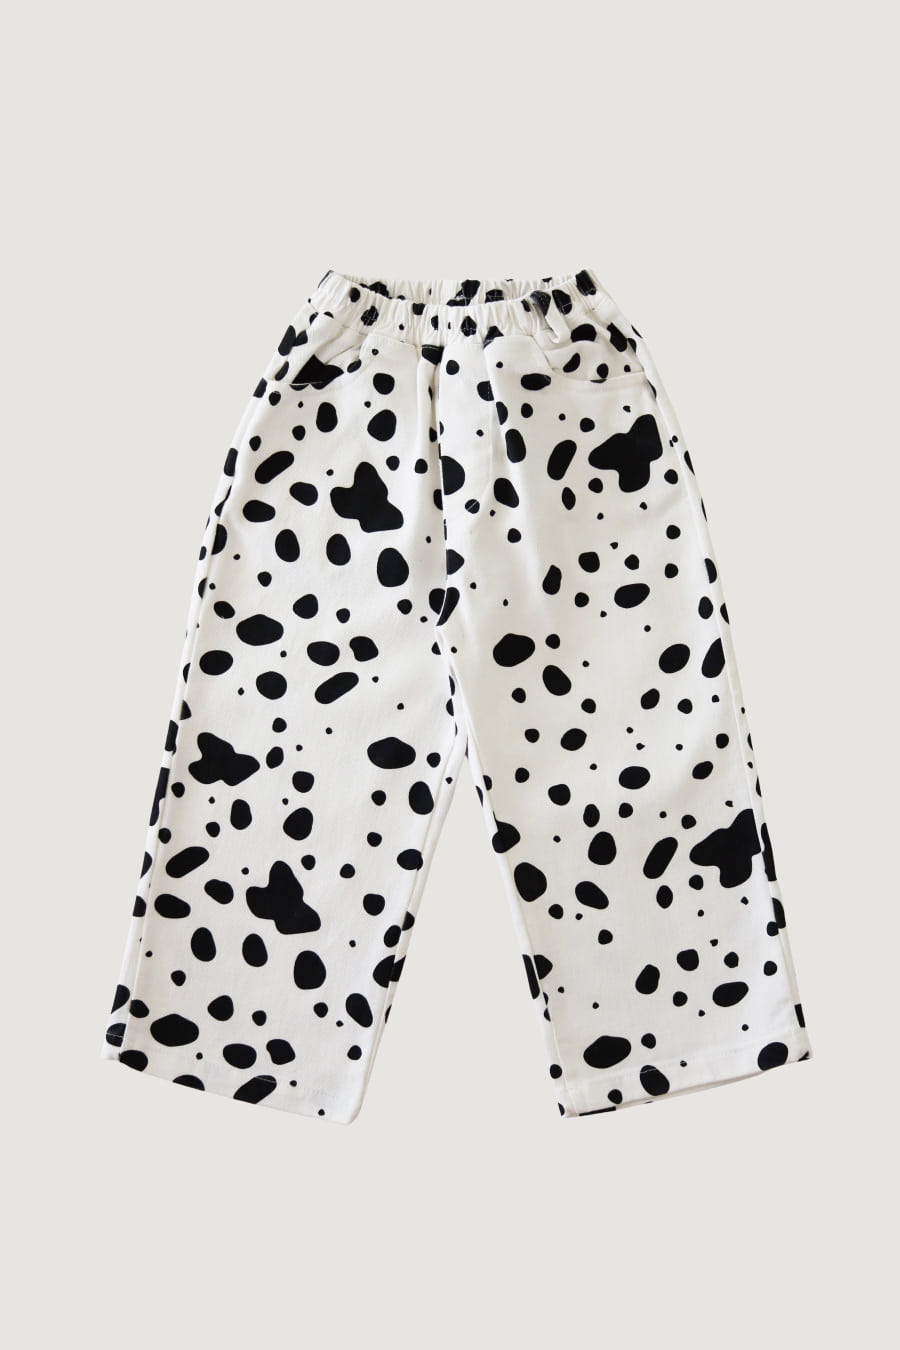 Dalmatian pants